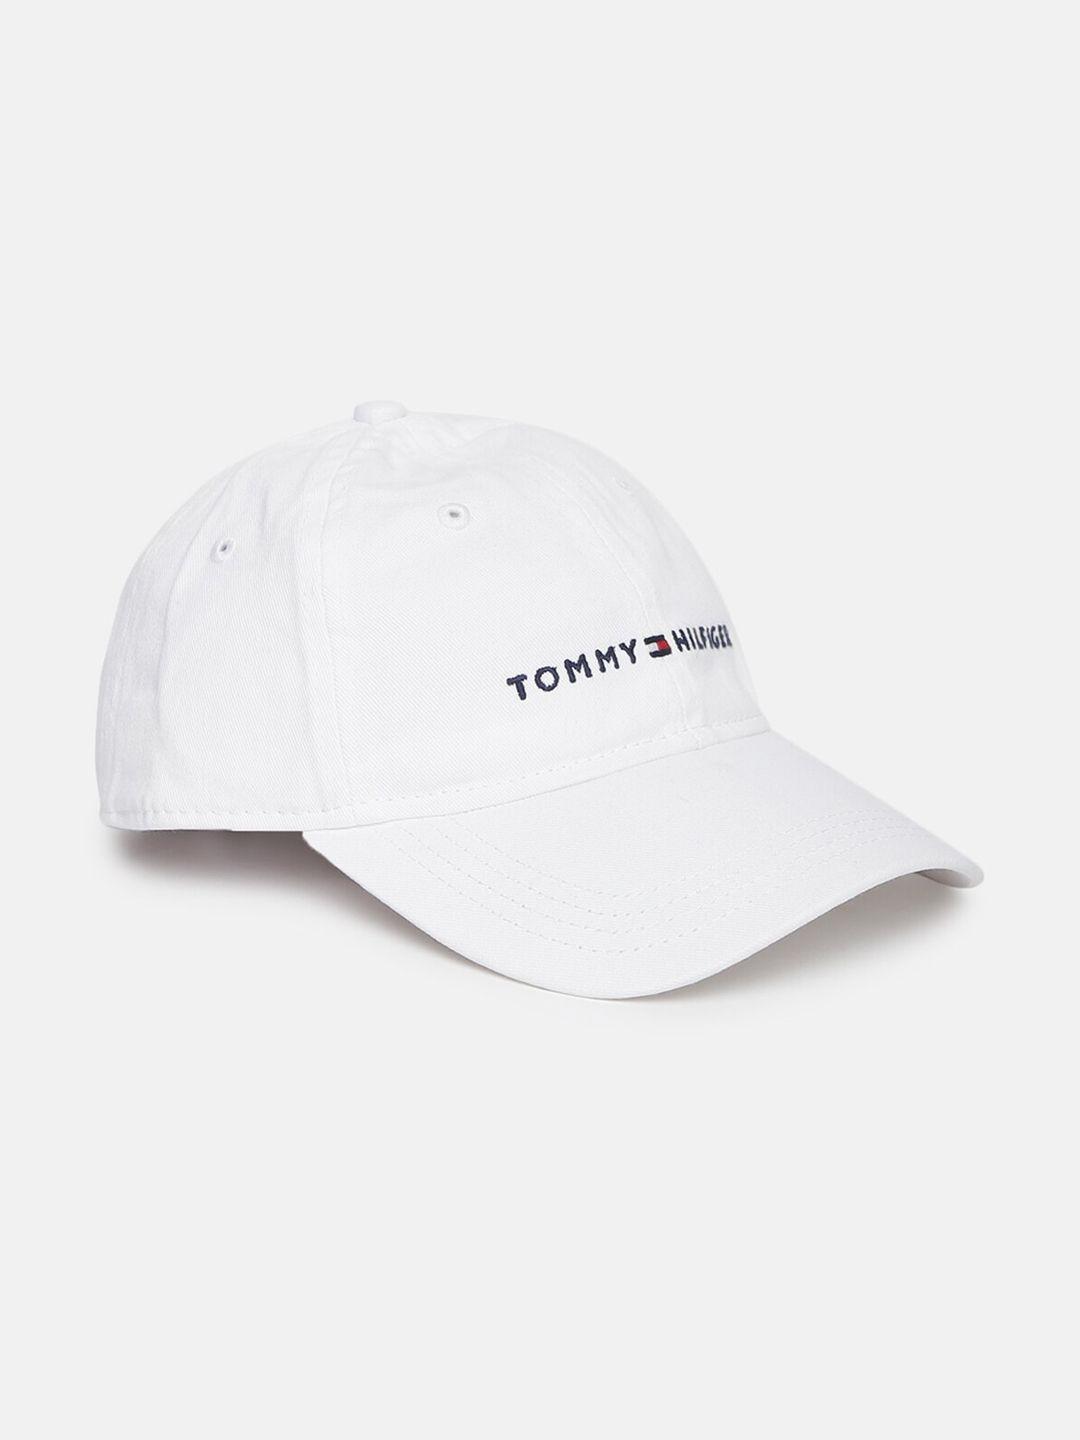 tommy-hilfiger-men-brand-logo-embroidered-cotton-baseball-cap